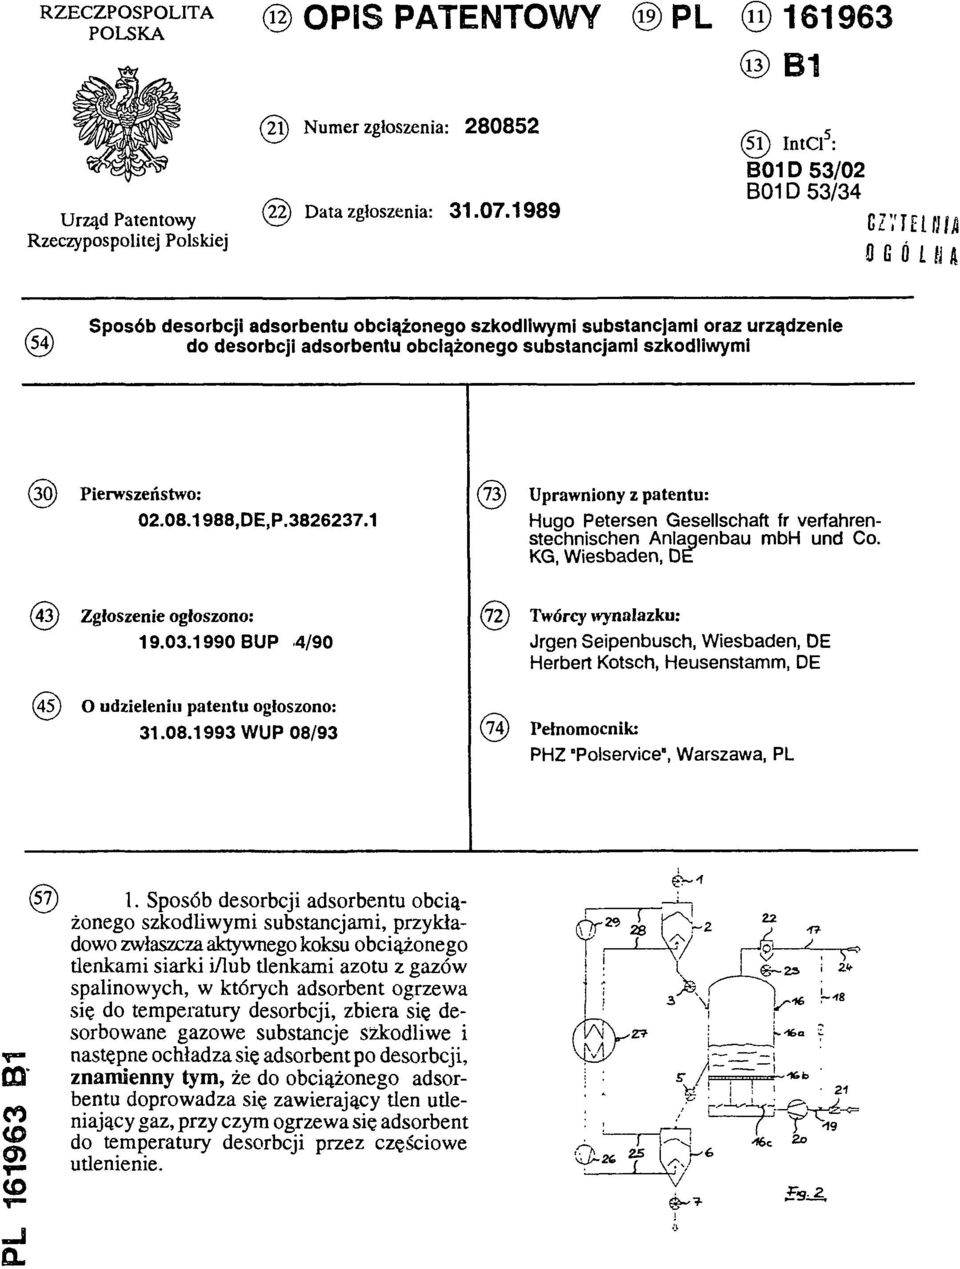 (30) Pierwszeństwo: 02.08.1988,DE,P.3826237.1 (73) Uprawniony z patentu: Hugo Petersen Gesellschaft fr verfahrenstechnischen Anlagenbau mbh und Co. KG, Wiesbaden, DE (43) Z głoszenie ogłoszono: 19.03.